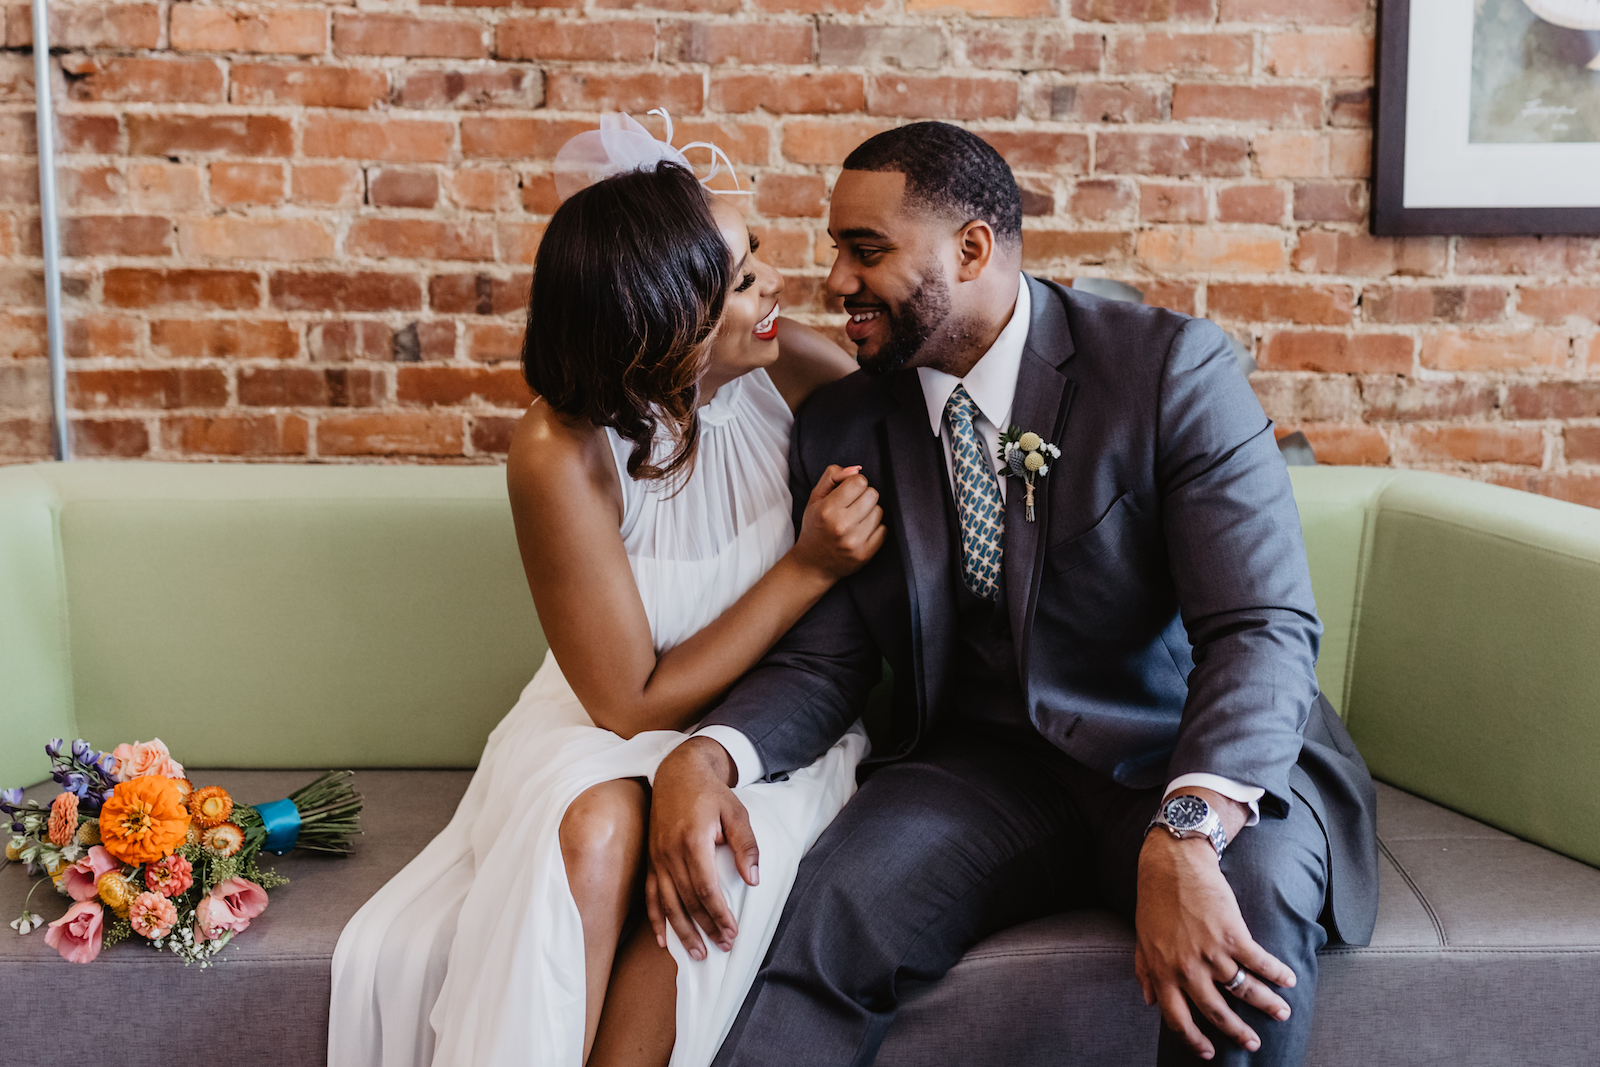 Music City Merger wedding inspiration featured on Nashville Bride Guide